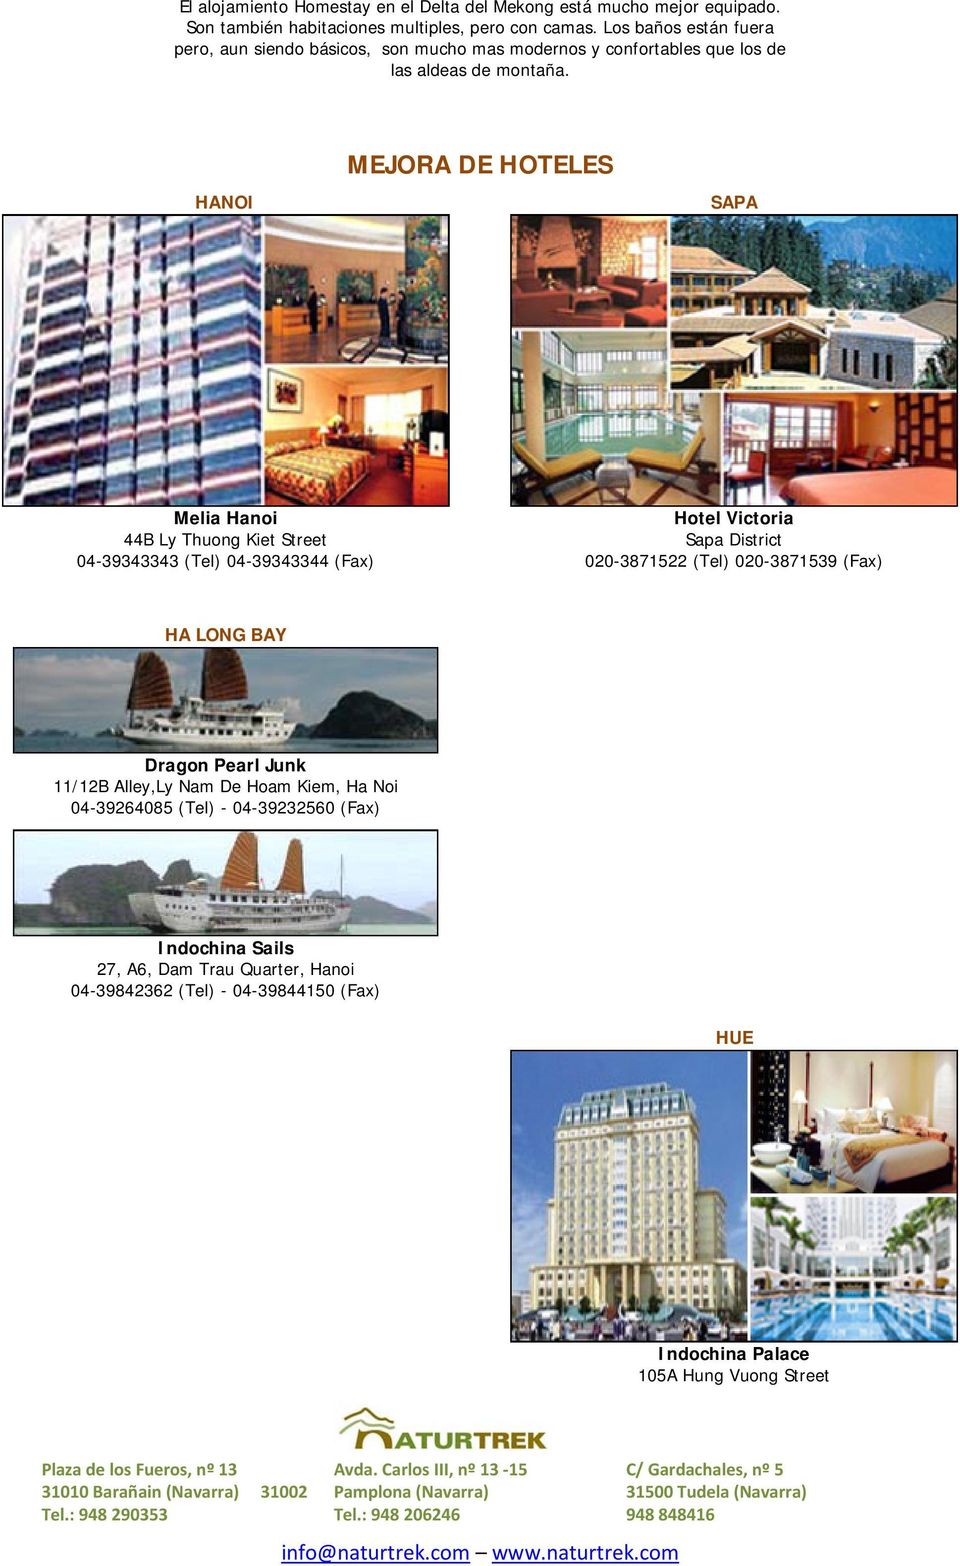 HANOI MEJORA DE HOTELES SAPA Melia Hanoi 44B Ly Thuong Kiet Street 04-39343343 (Tel) 04-39343344 (Fax) Hotel Victoria Sapa District 020-3871522 (Tel) 020-3871539